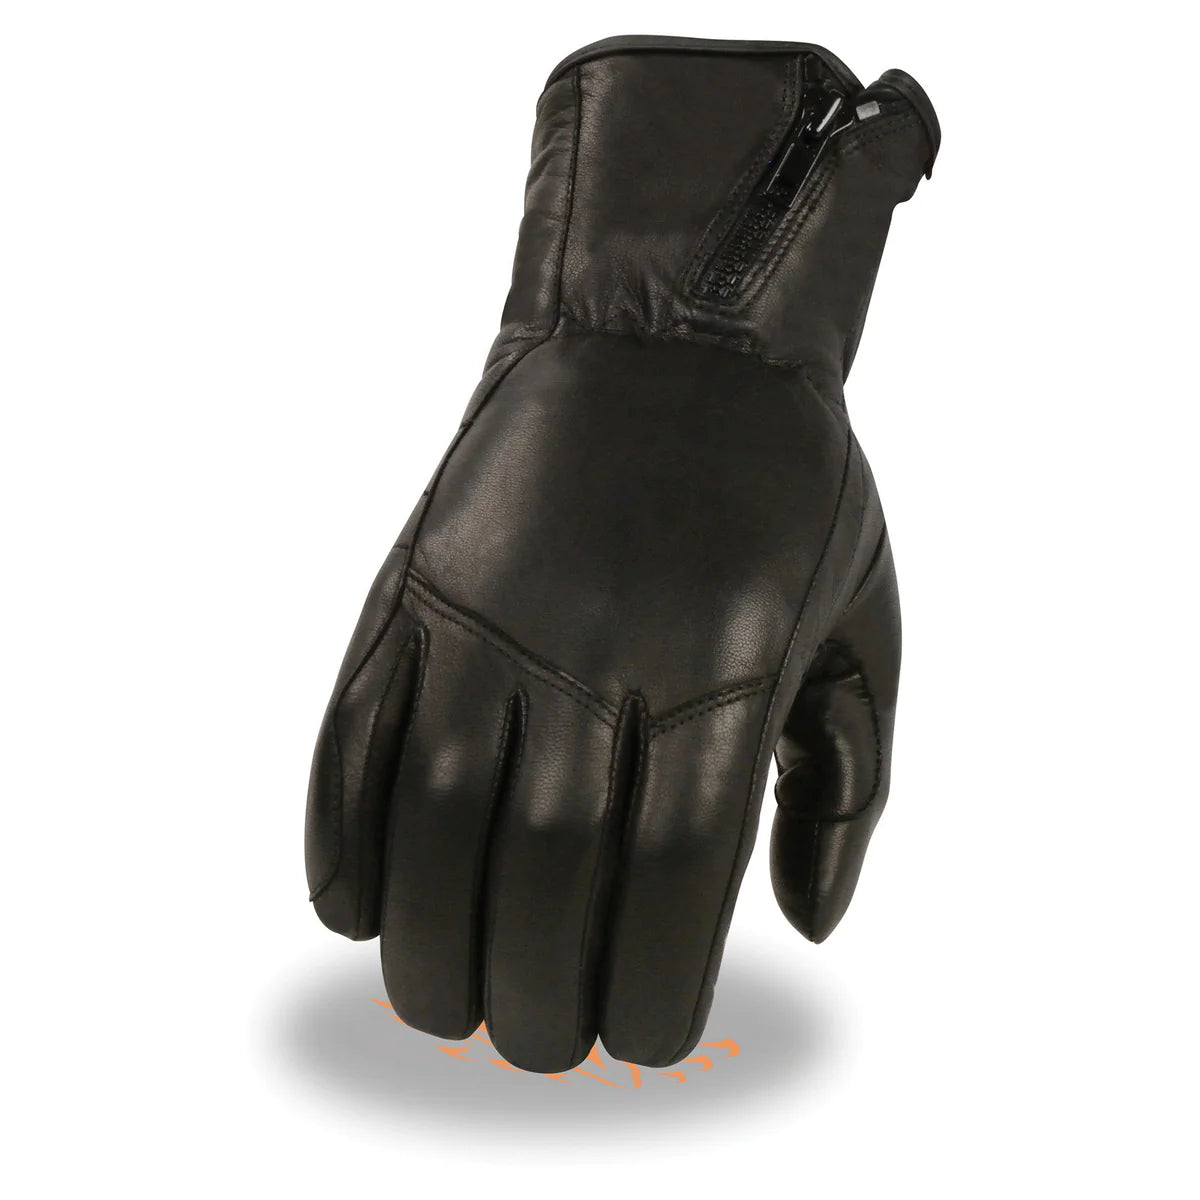 Men's Black Premium Leather Long Wrist Gloves with Zipper Top